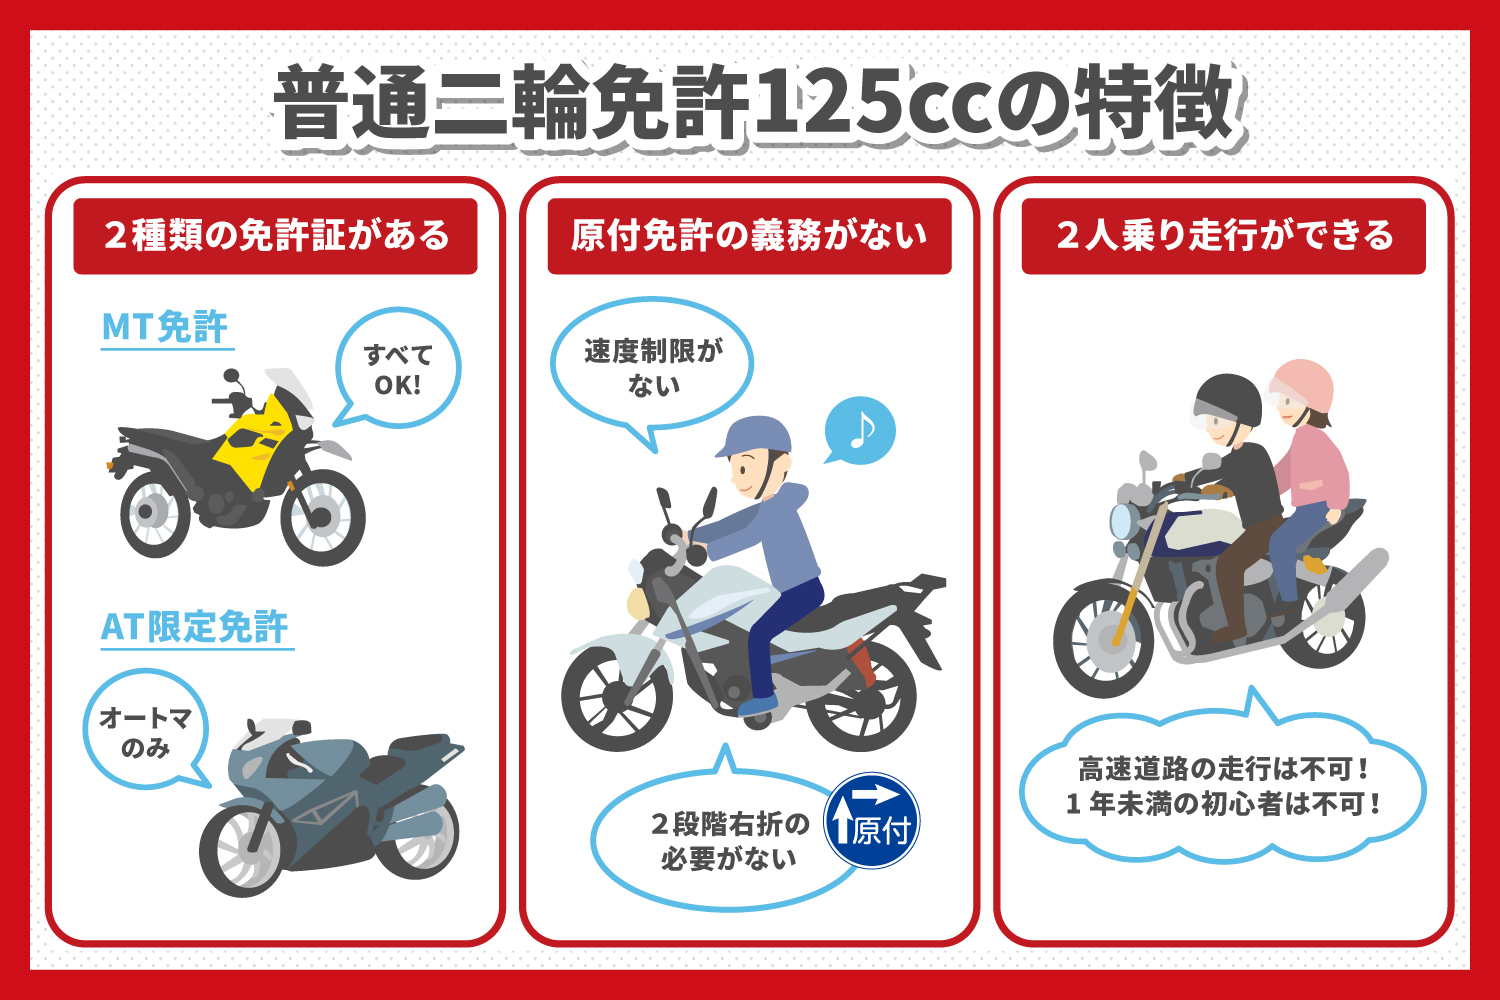 125ccバイク普通二輪免許取得の近道 武蔵境自動車教習所